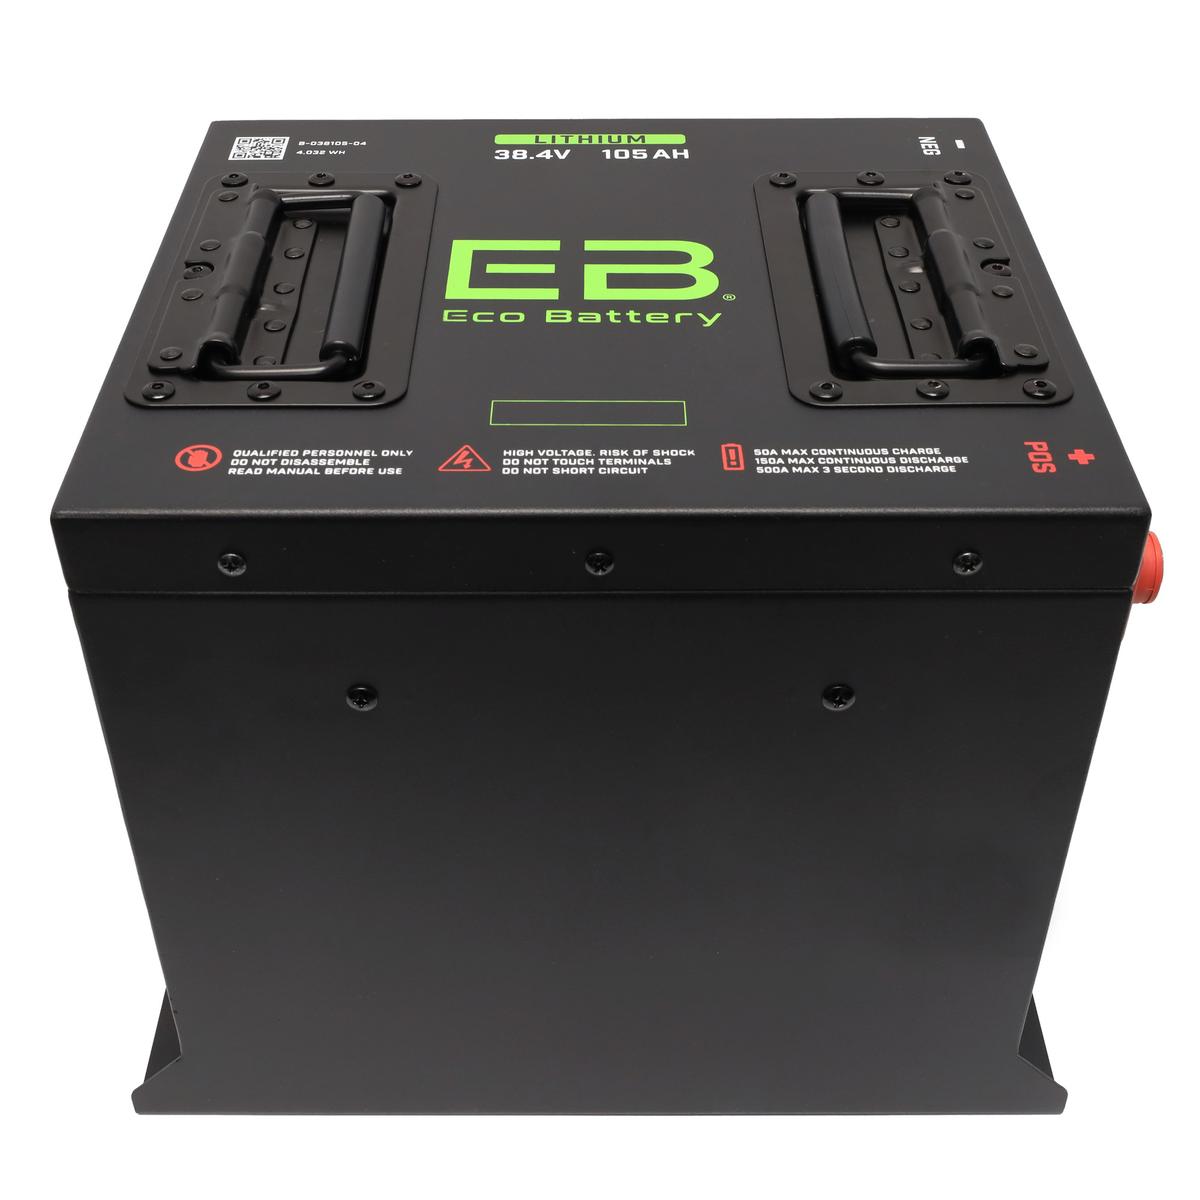 EZGO Freedom TXT (36V) Eco Lithium 38V 105Ah Battery Bundle - Cube